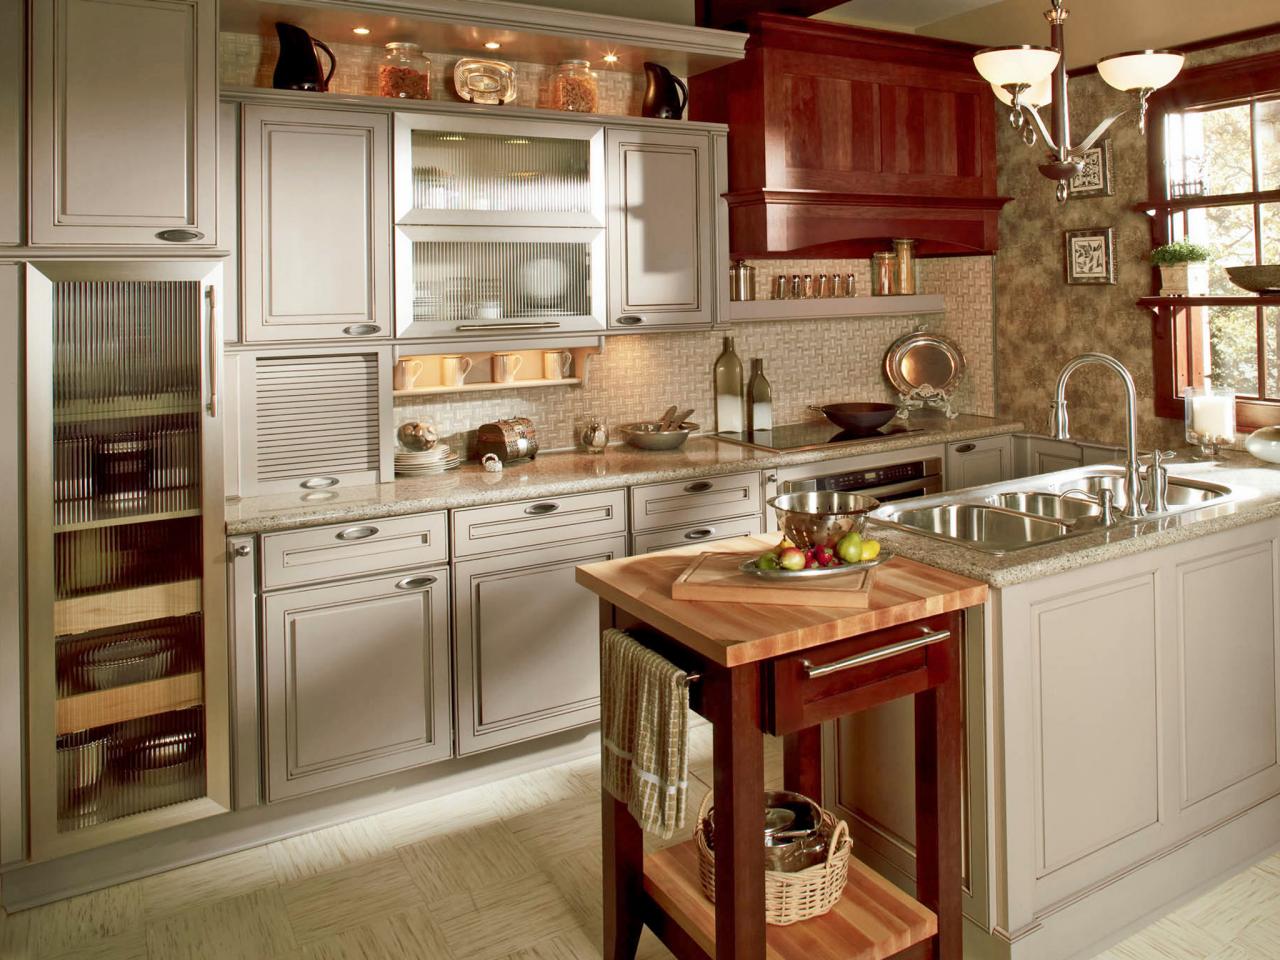 CI-Wellborn-Cabinets_soft-gray-painted-kitchen-cabinets_4x3.jpg.rend.hgtvcom.1280.960.jpeg